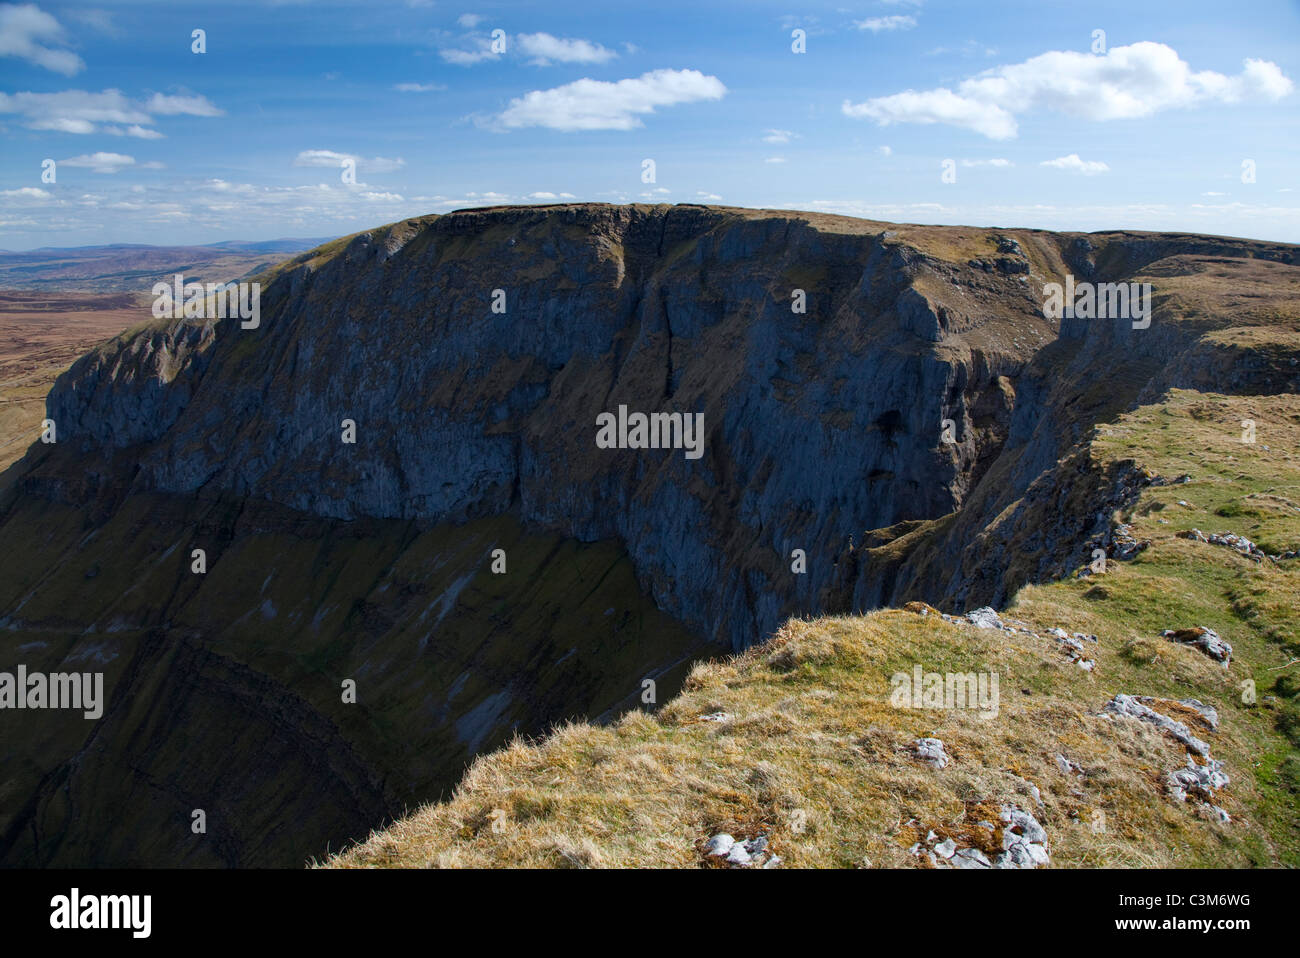 The cliffs of Annacoona, Benwiskin Mountain, Dartry Mountains, County Sligo, Ireland. Stock Photo